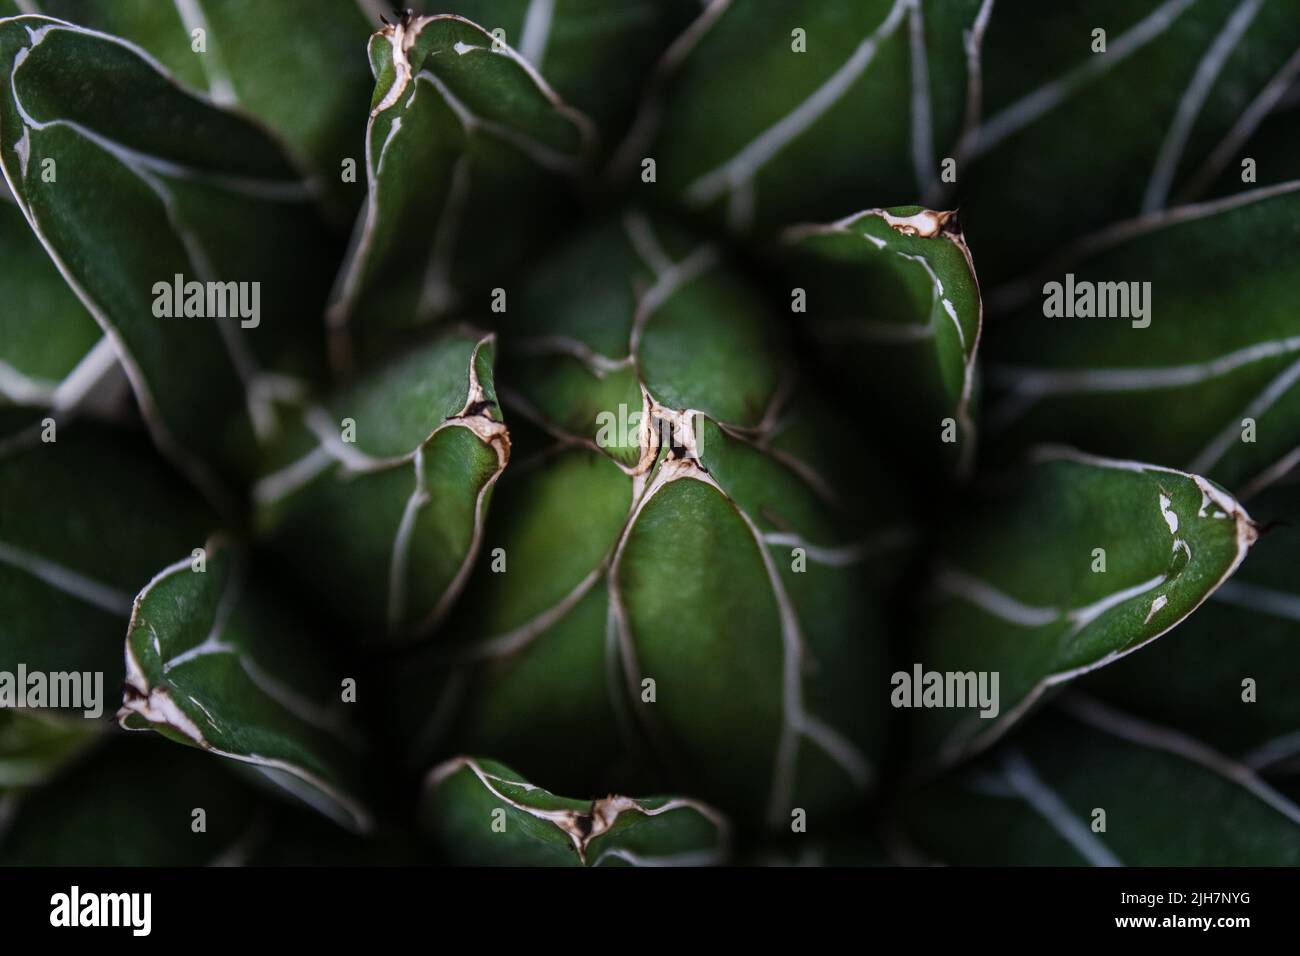 Macro photo of a succulent plant Stock Photo